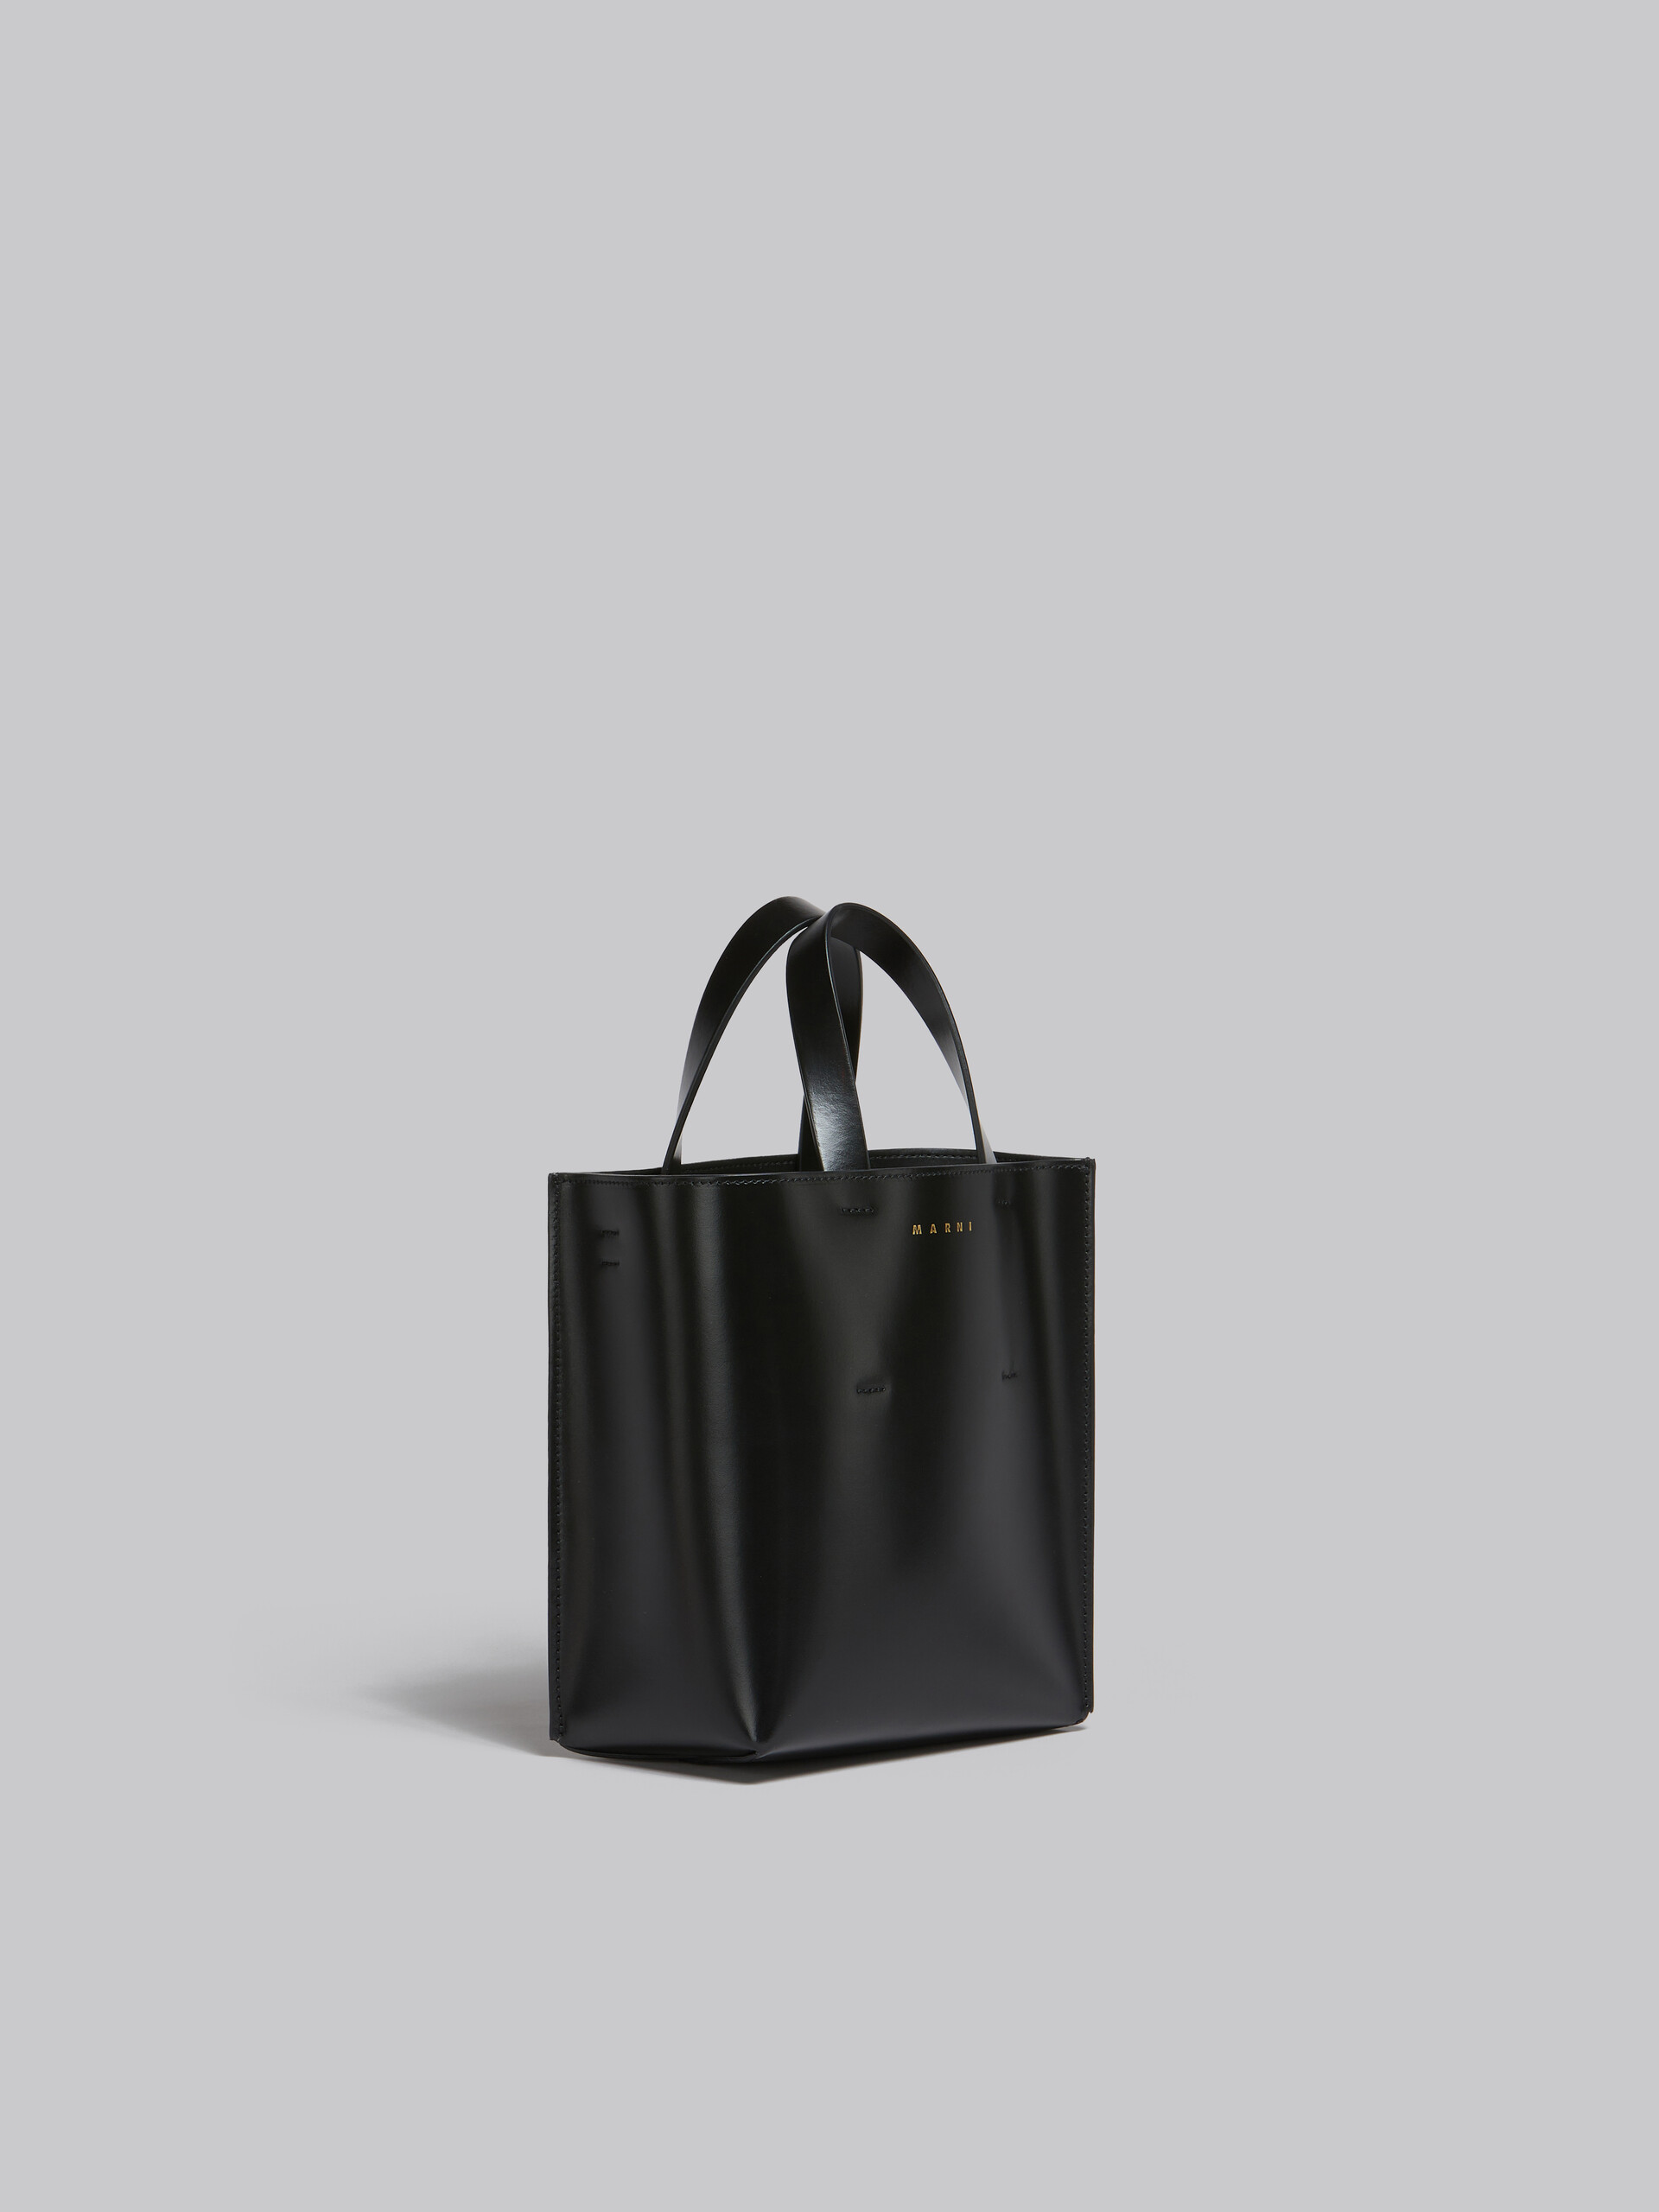 Marni Mini Bag in Black